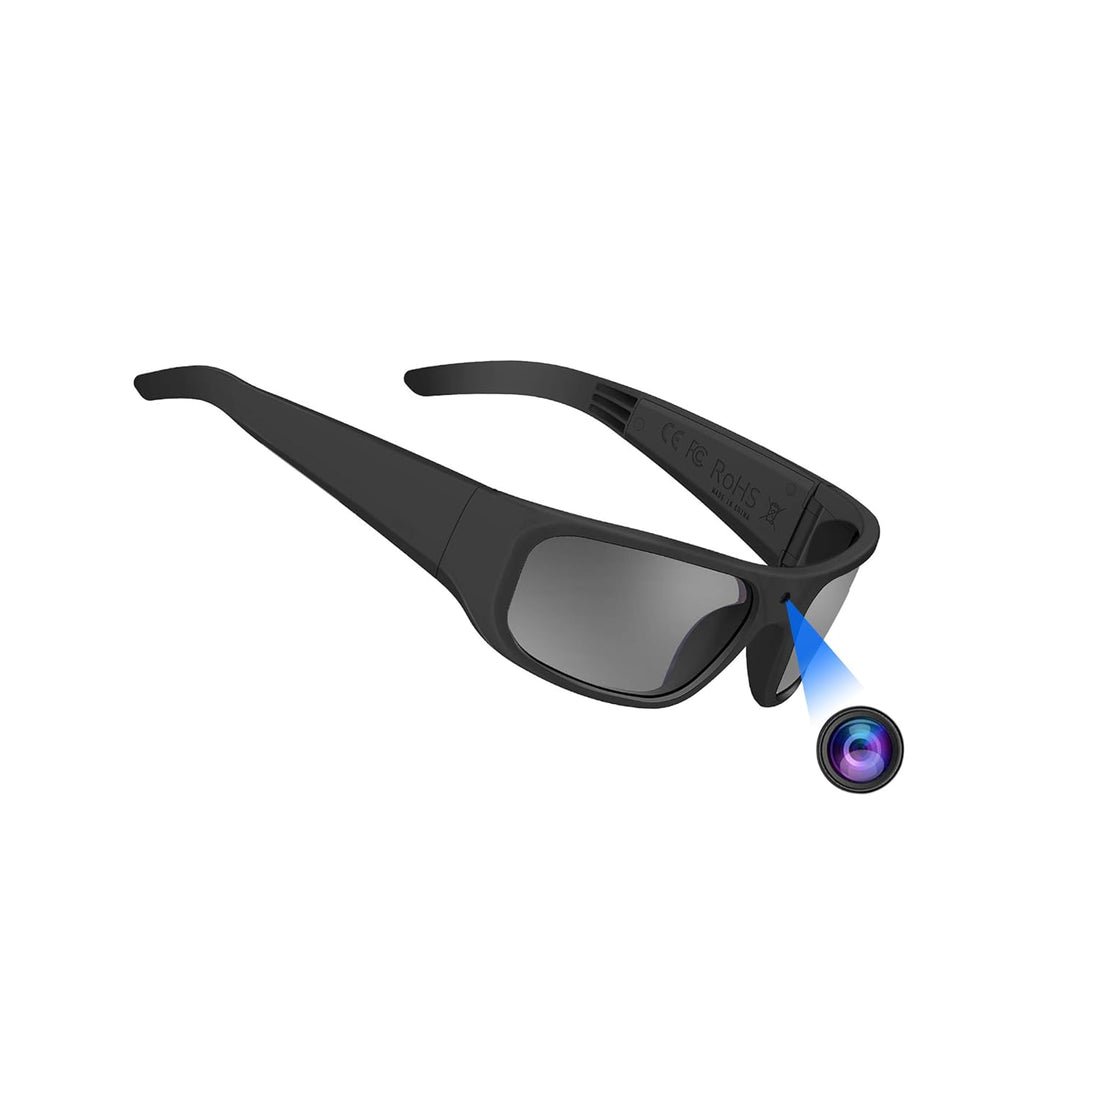 OhO sunshine OhO 32G Camera Glasses,Super Slim 1080P Smart Glasses with UV400 Sunglasses Lens for Outdoor Sport